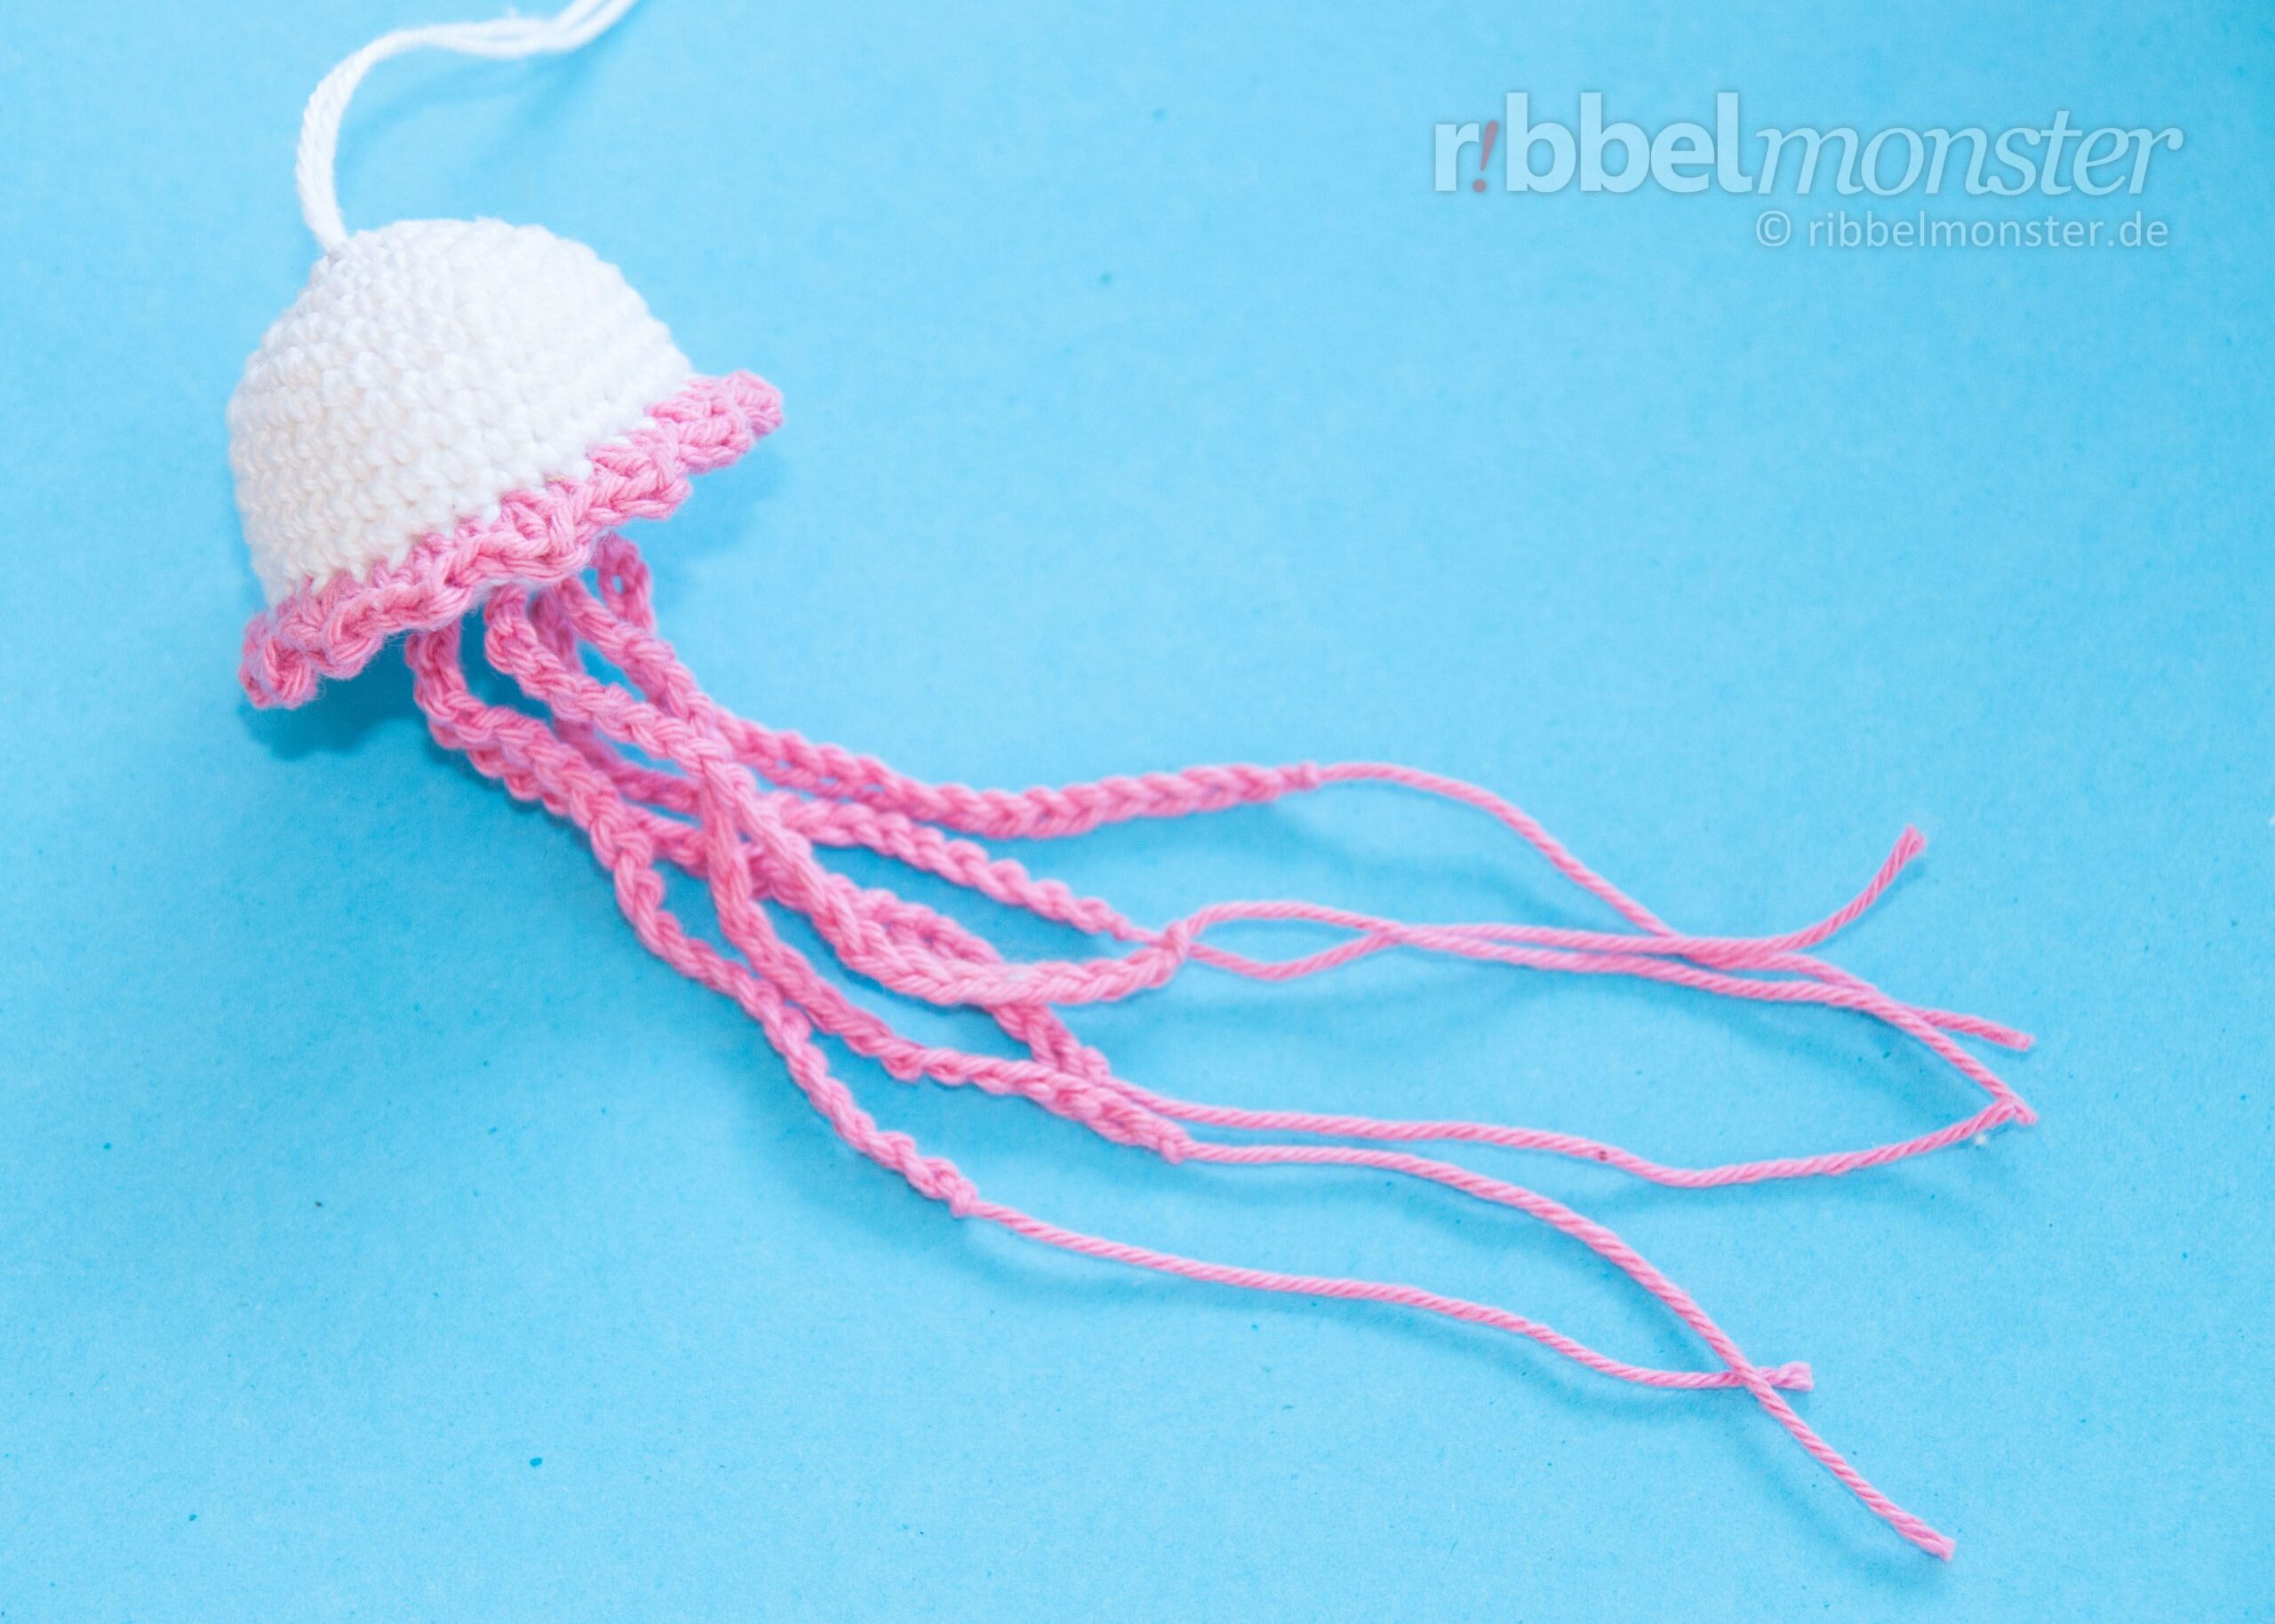 Amigurumi – Crochet Jellyfish “Quendolin”